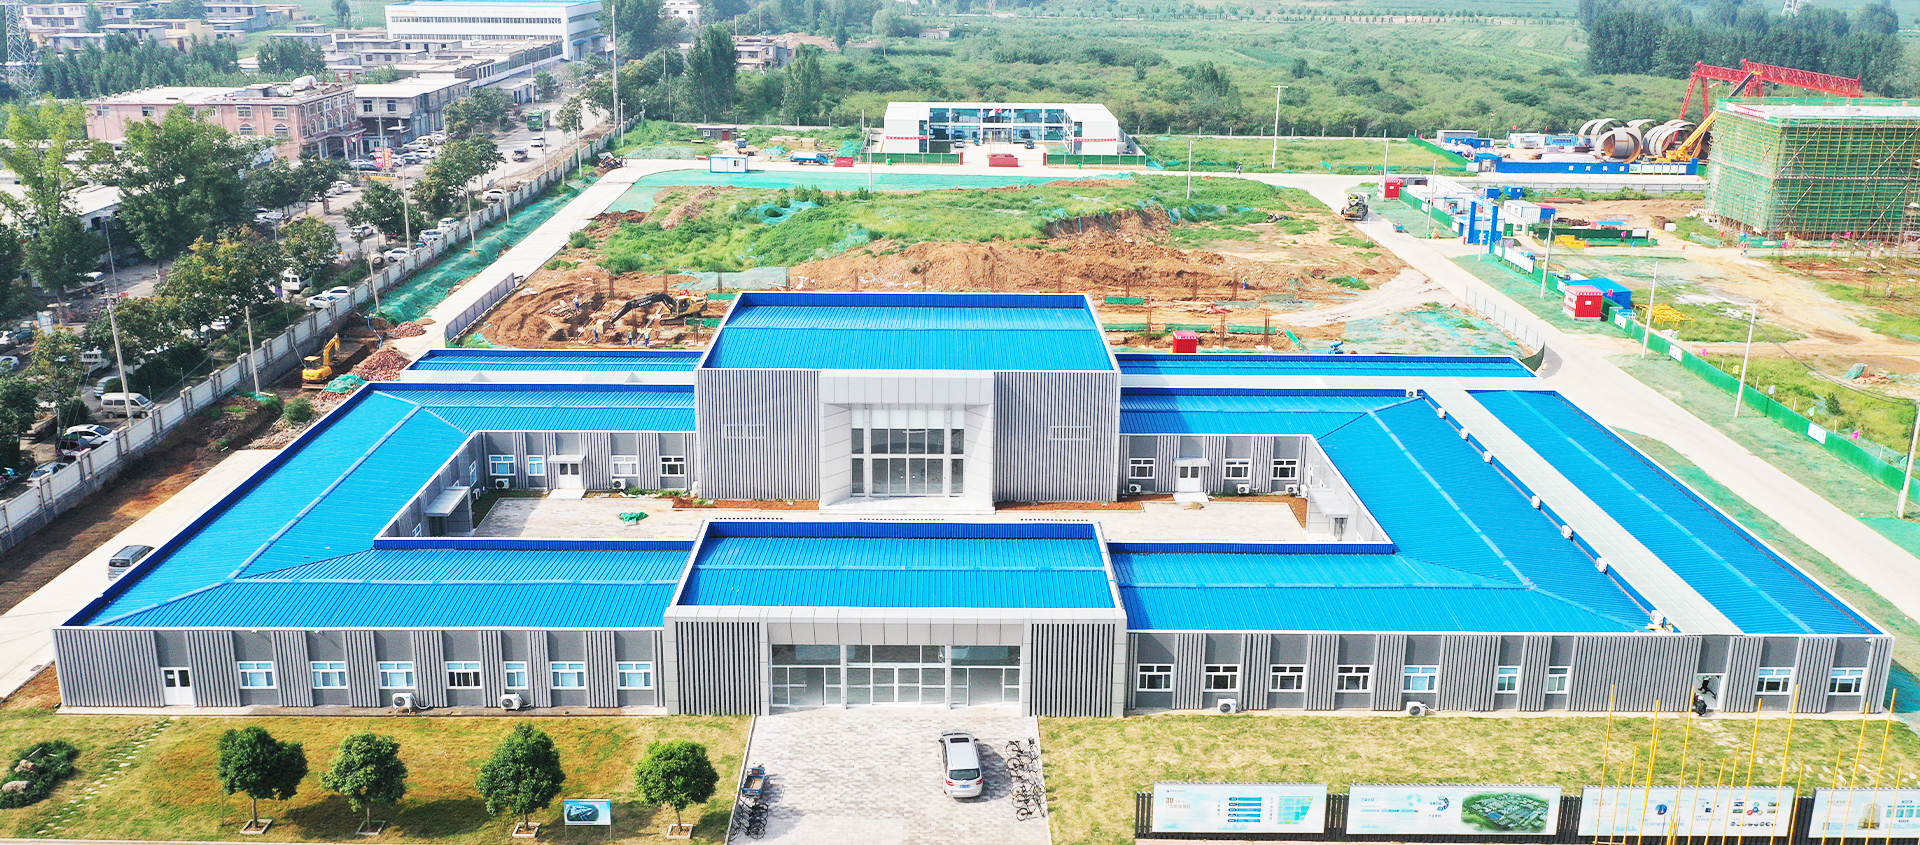 Shandong Yankuang Group គម្រោង caprolactam 300,000 តោន / ឆ្នាំ។